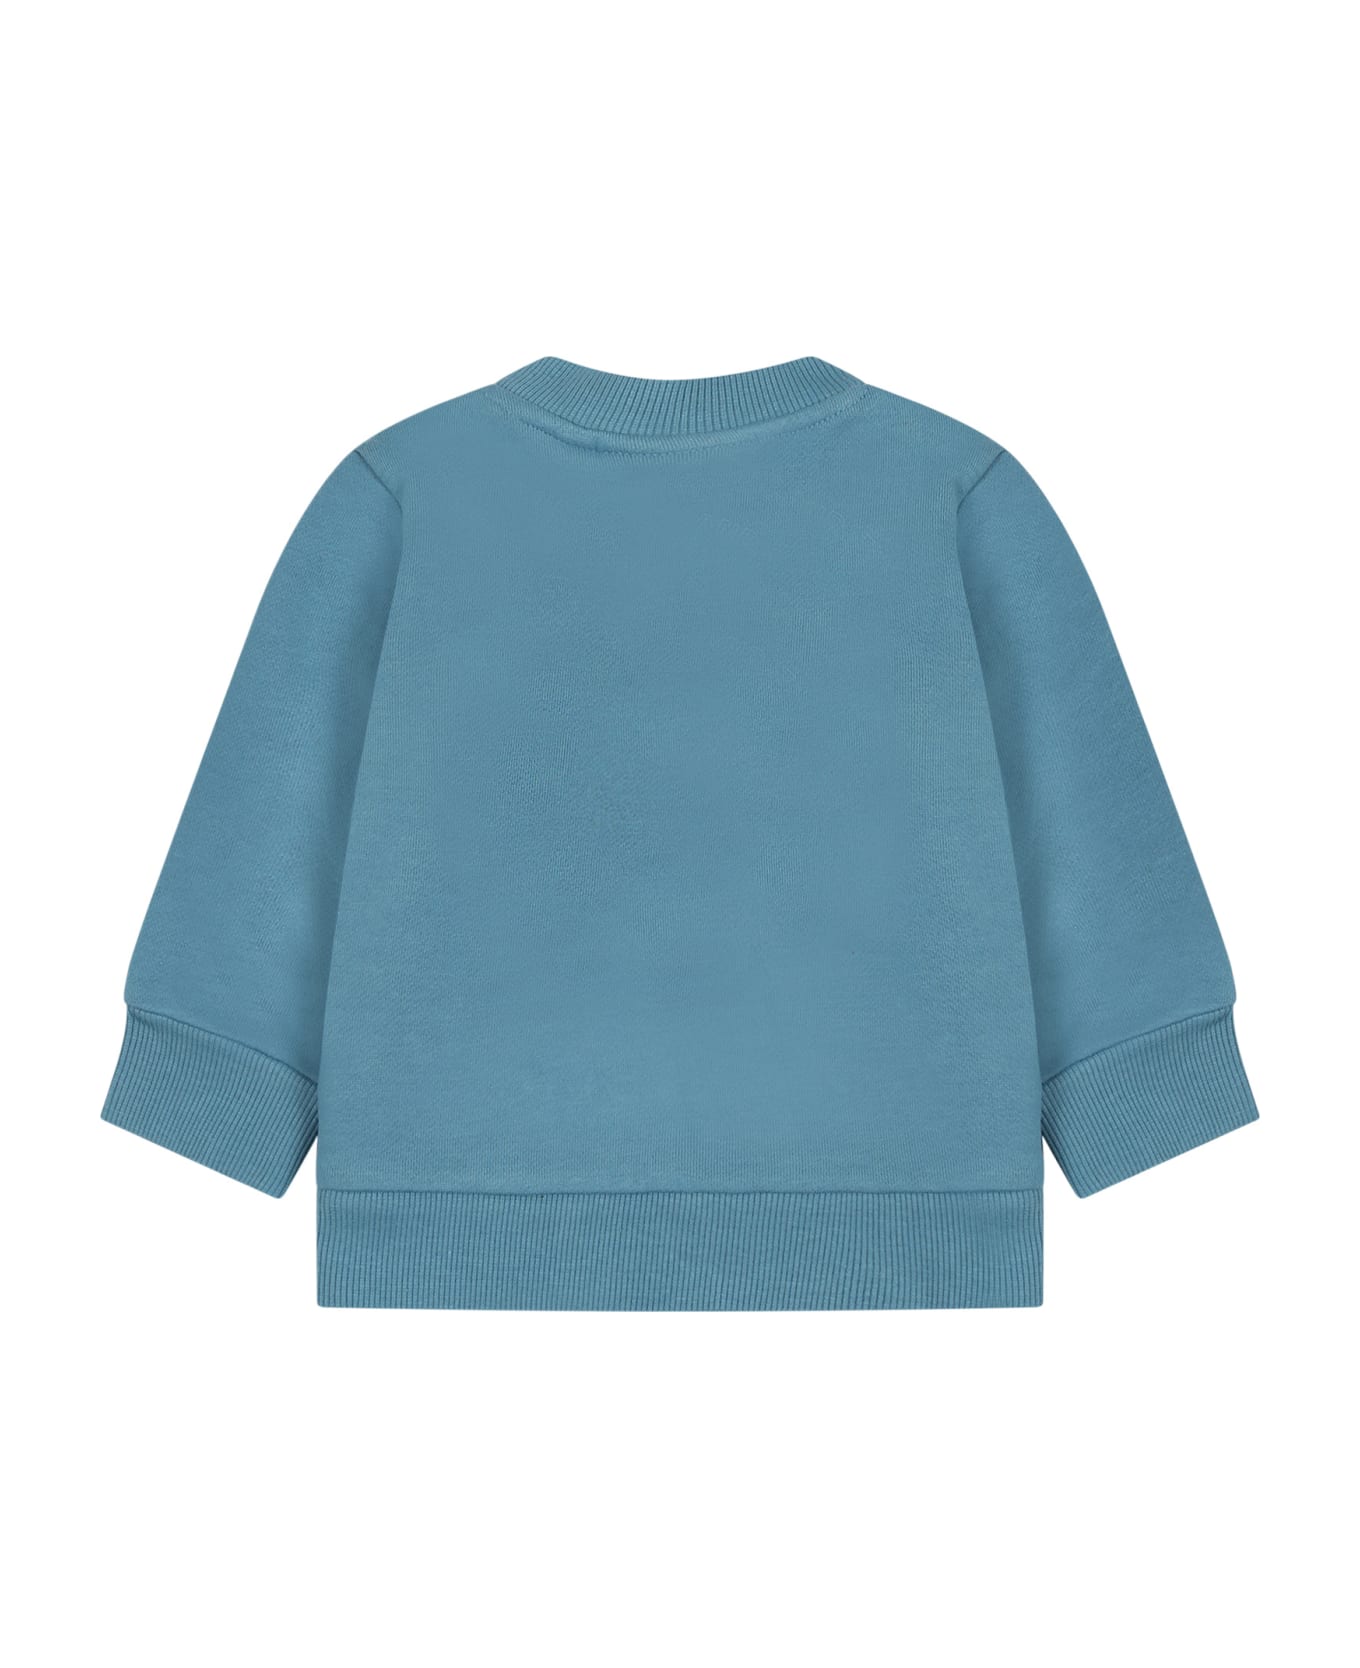 Timberland Light-blue Sweatshirt For Baby Boy With Printed Logo - Light Blue